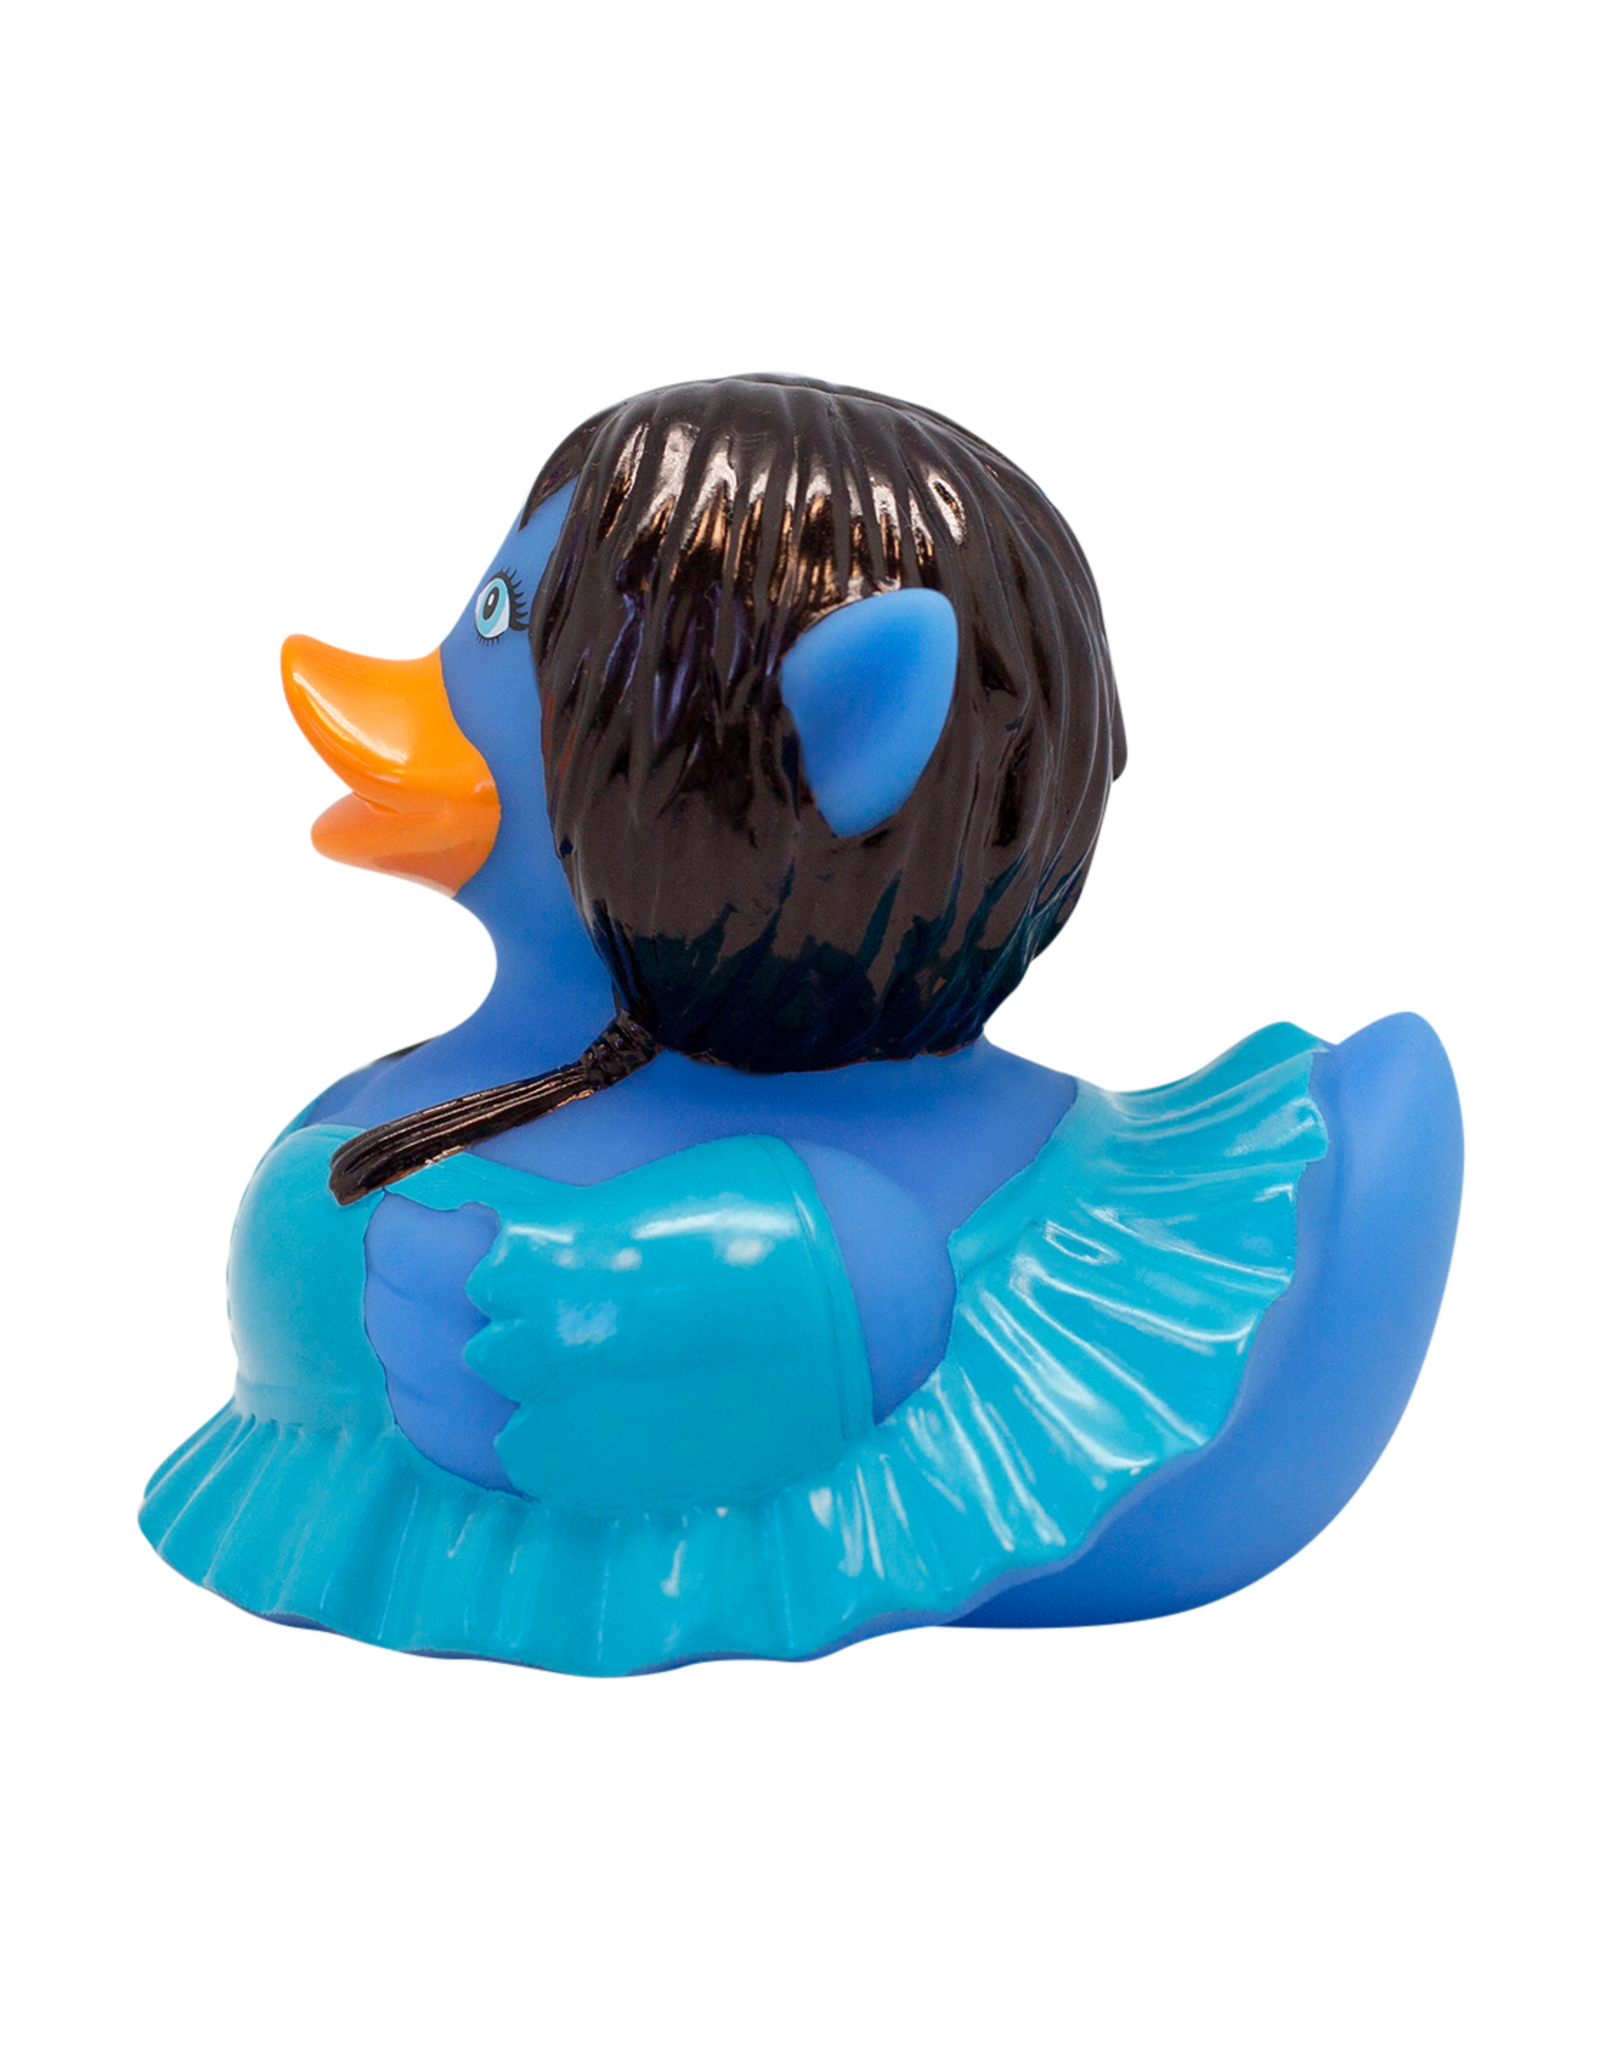 Lilalu Avatara Rubber Duck